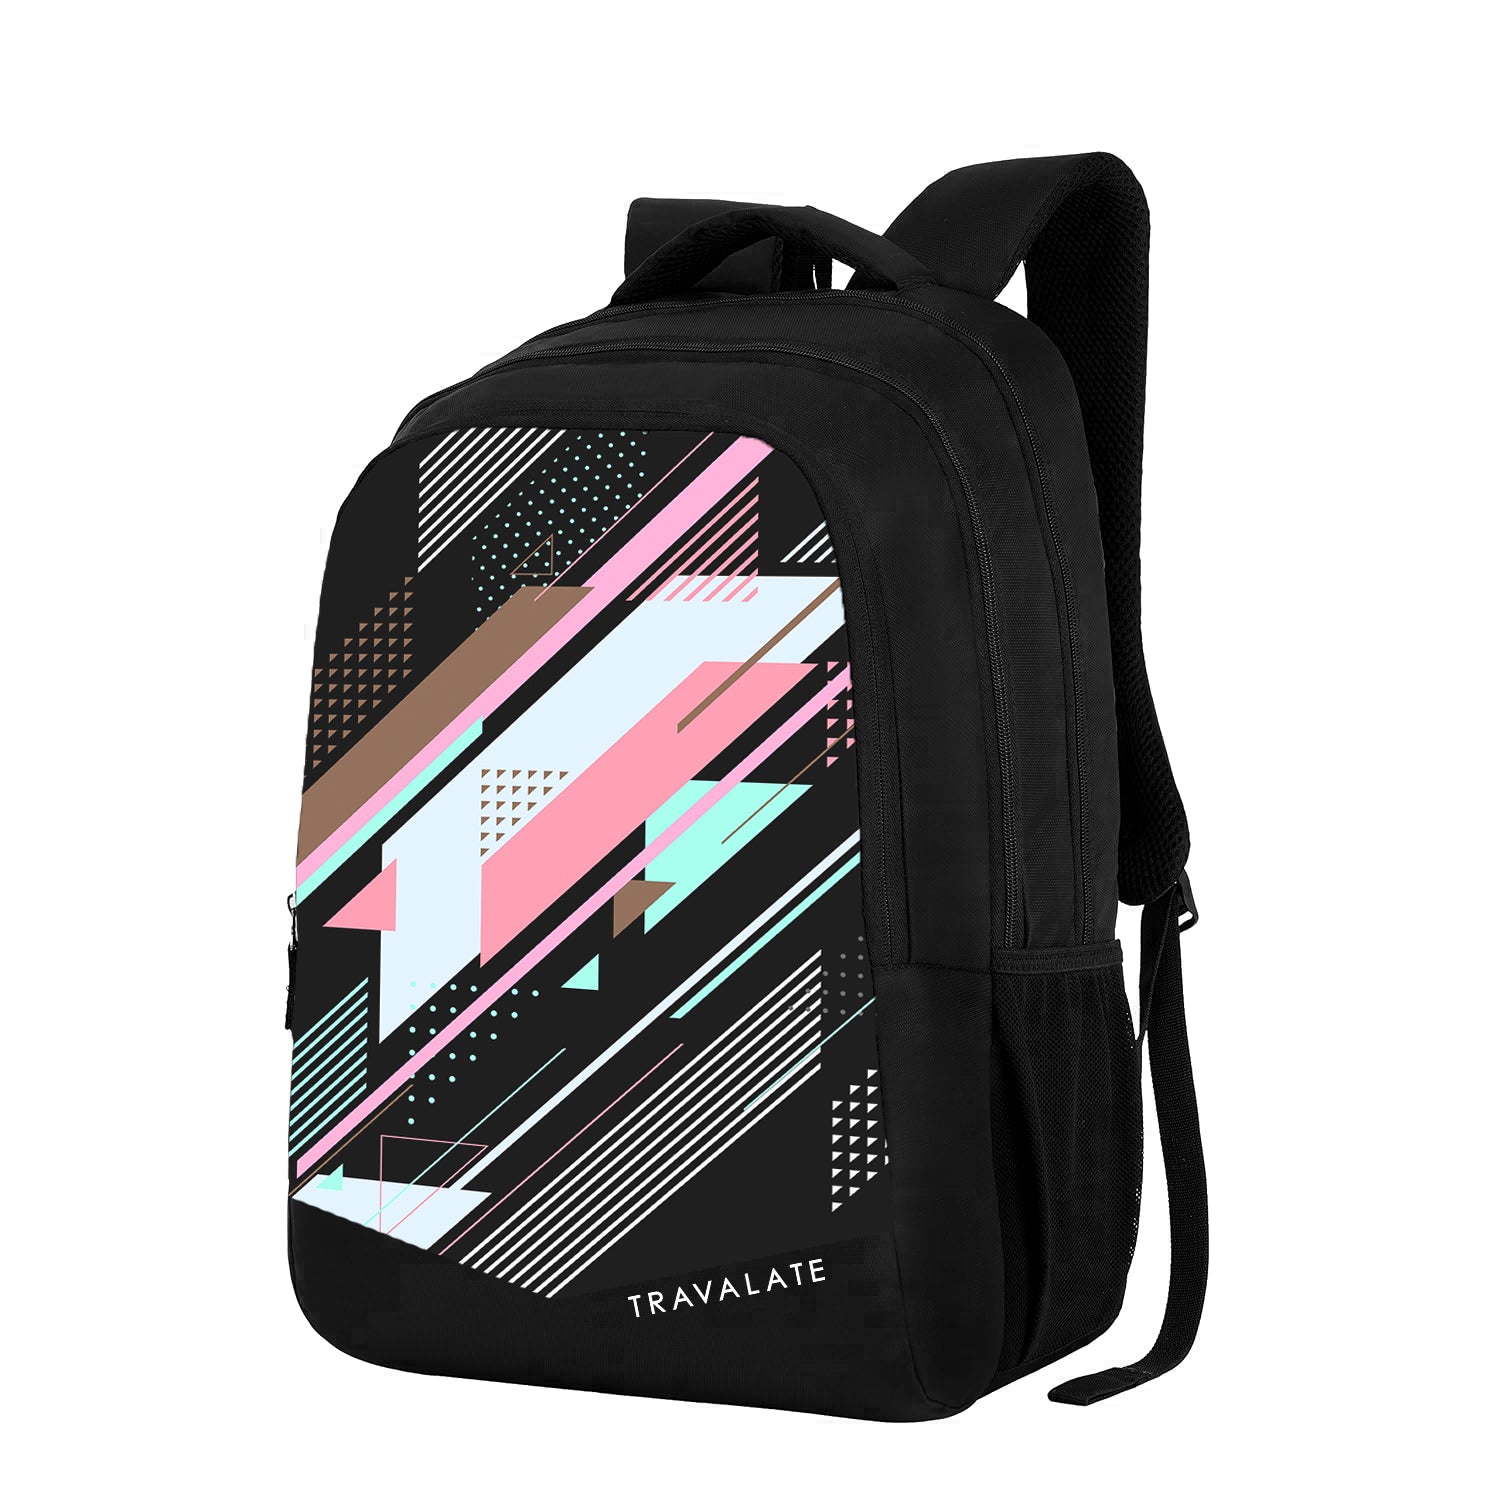 Printed Laptop Backpack | Black And Pink